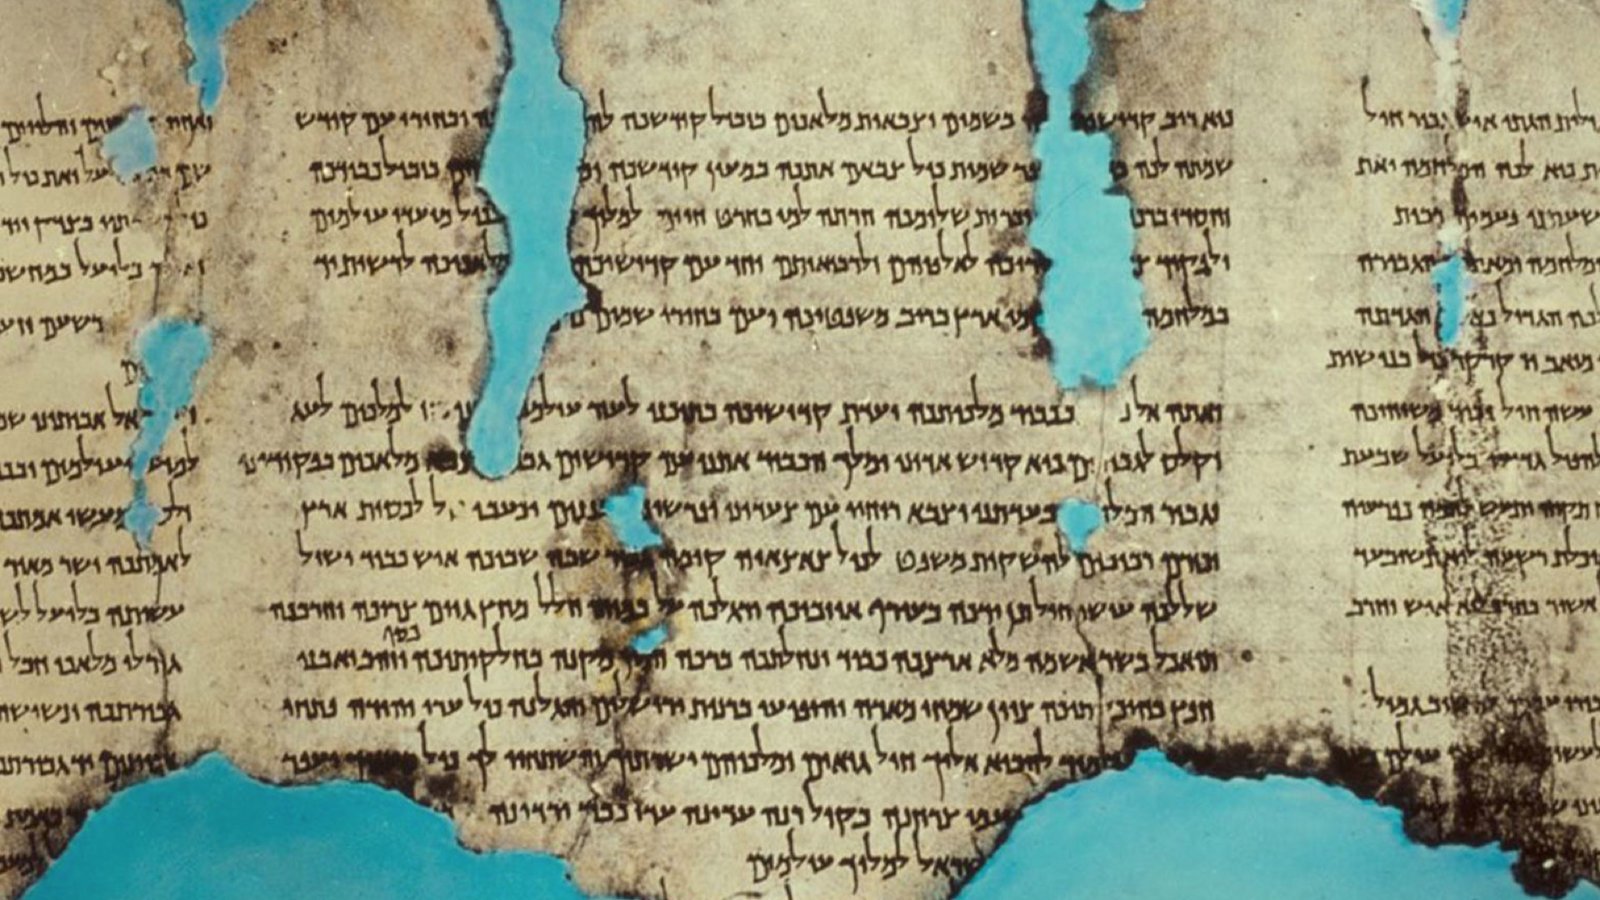 Apocrypha and Dead Sea Scrolls